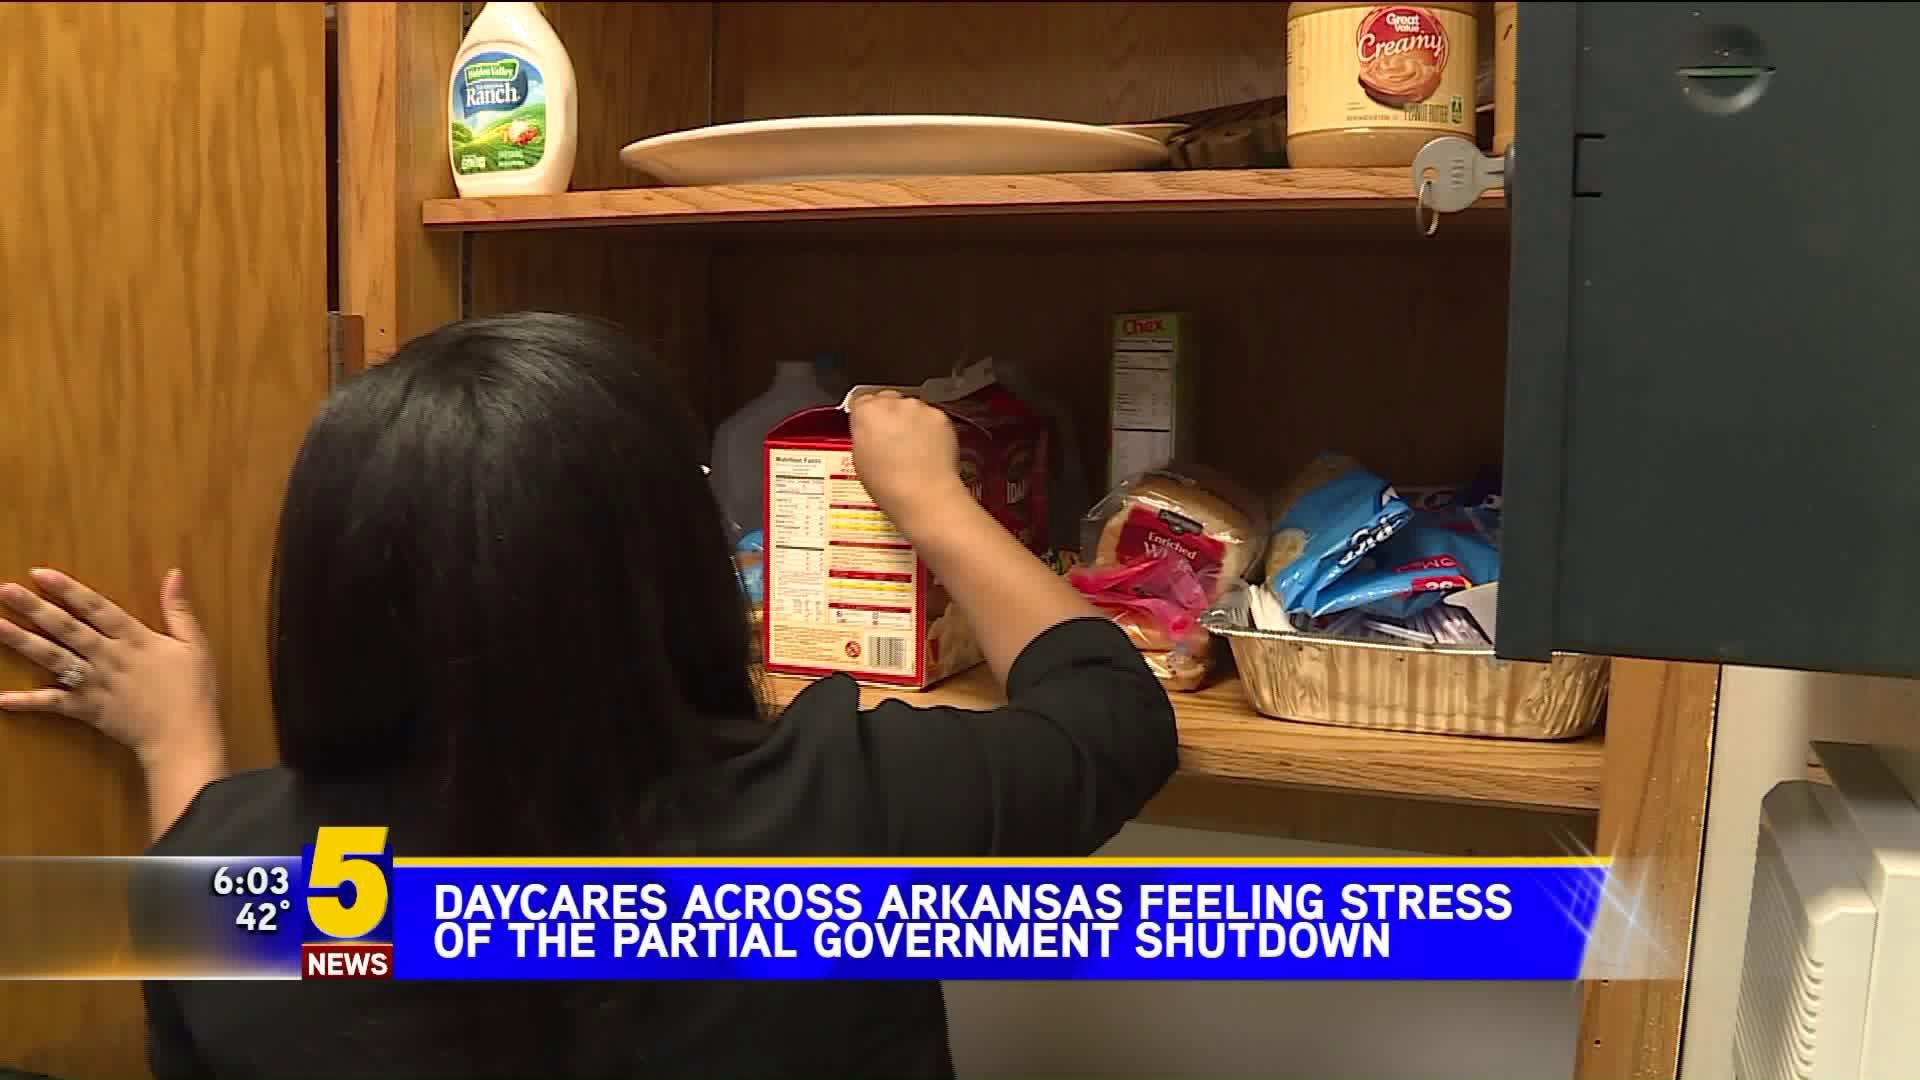 daycares across arkansas feeling stress of partial government shutdown